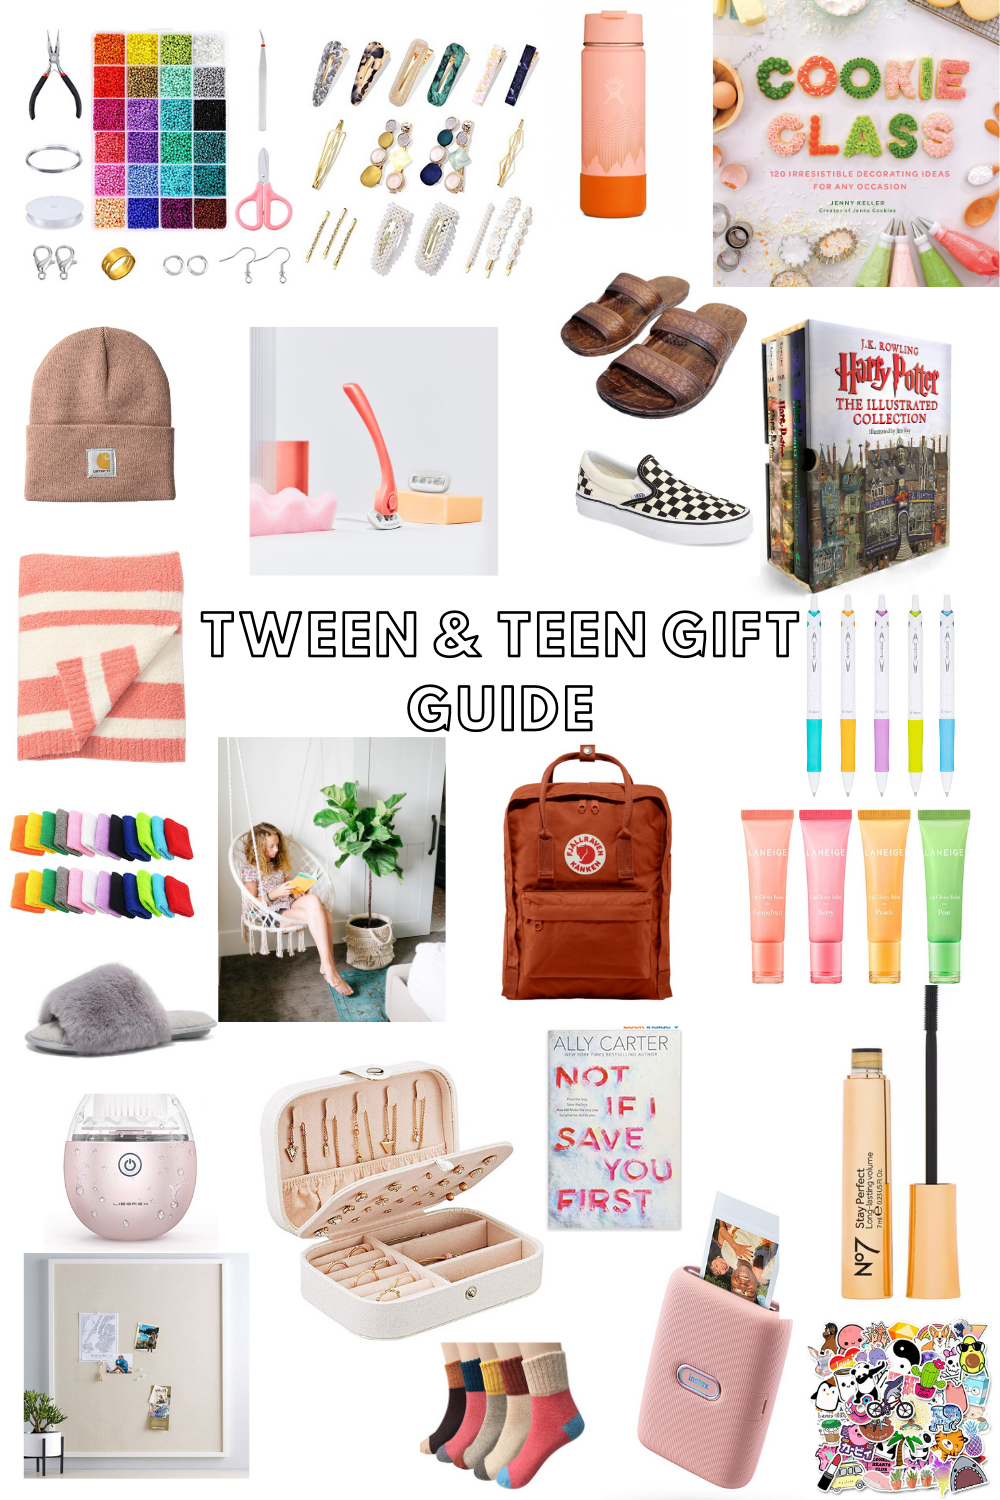 100+ christmas gift ideas for teen girls 2020 (teen gift guide) 